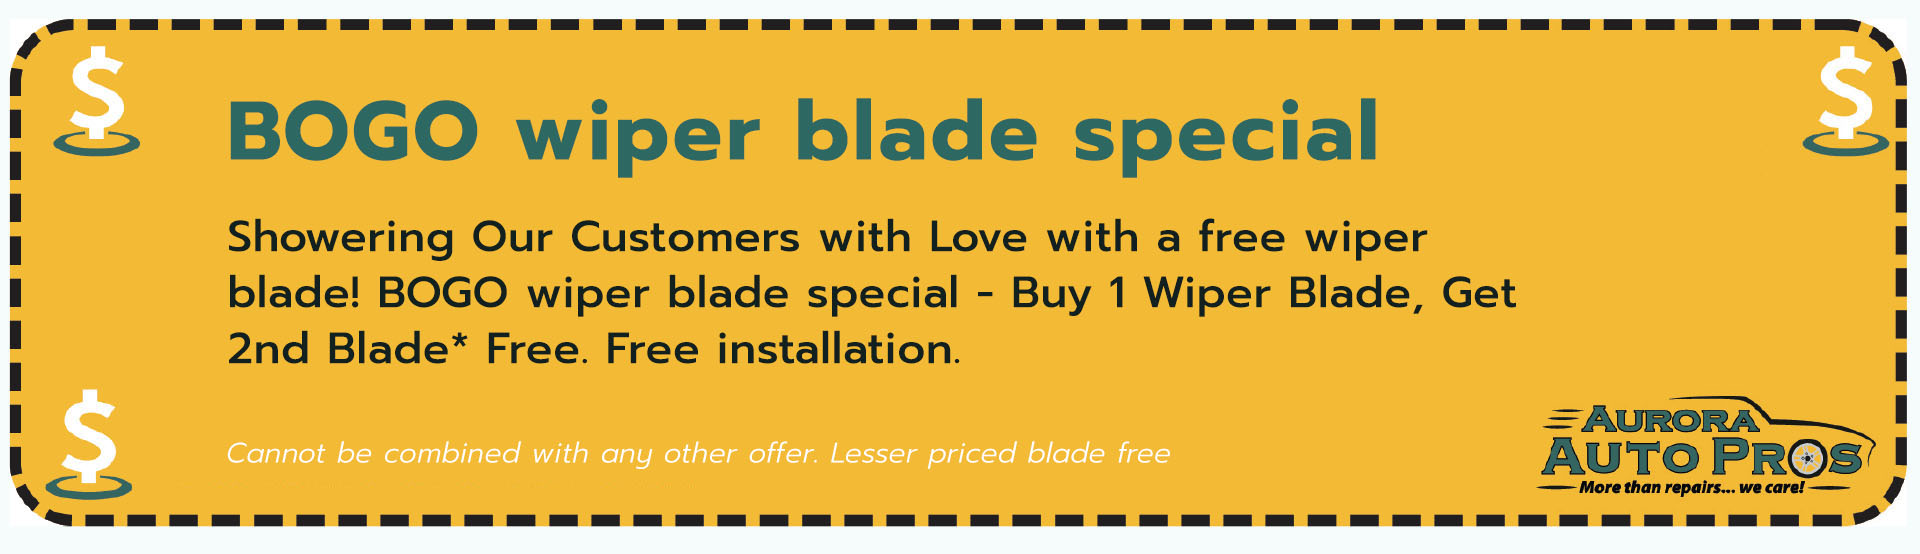 BOGO Wiper Blade Special